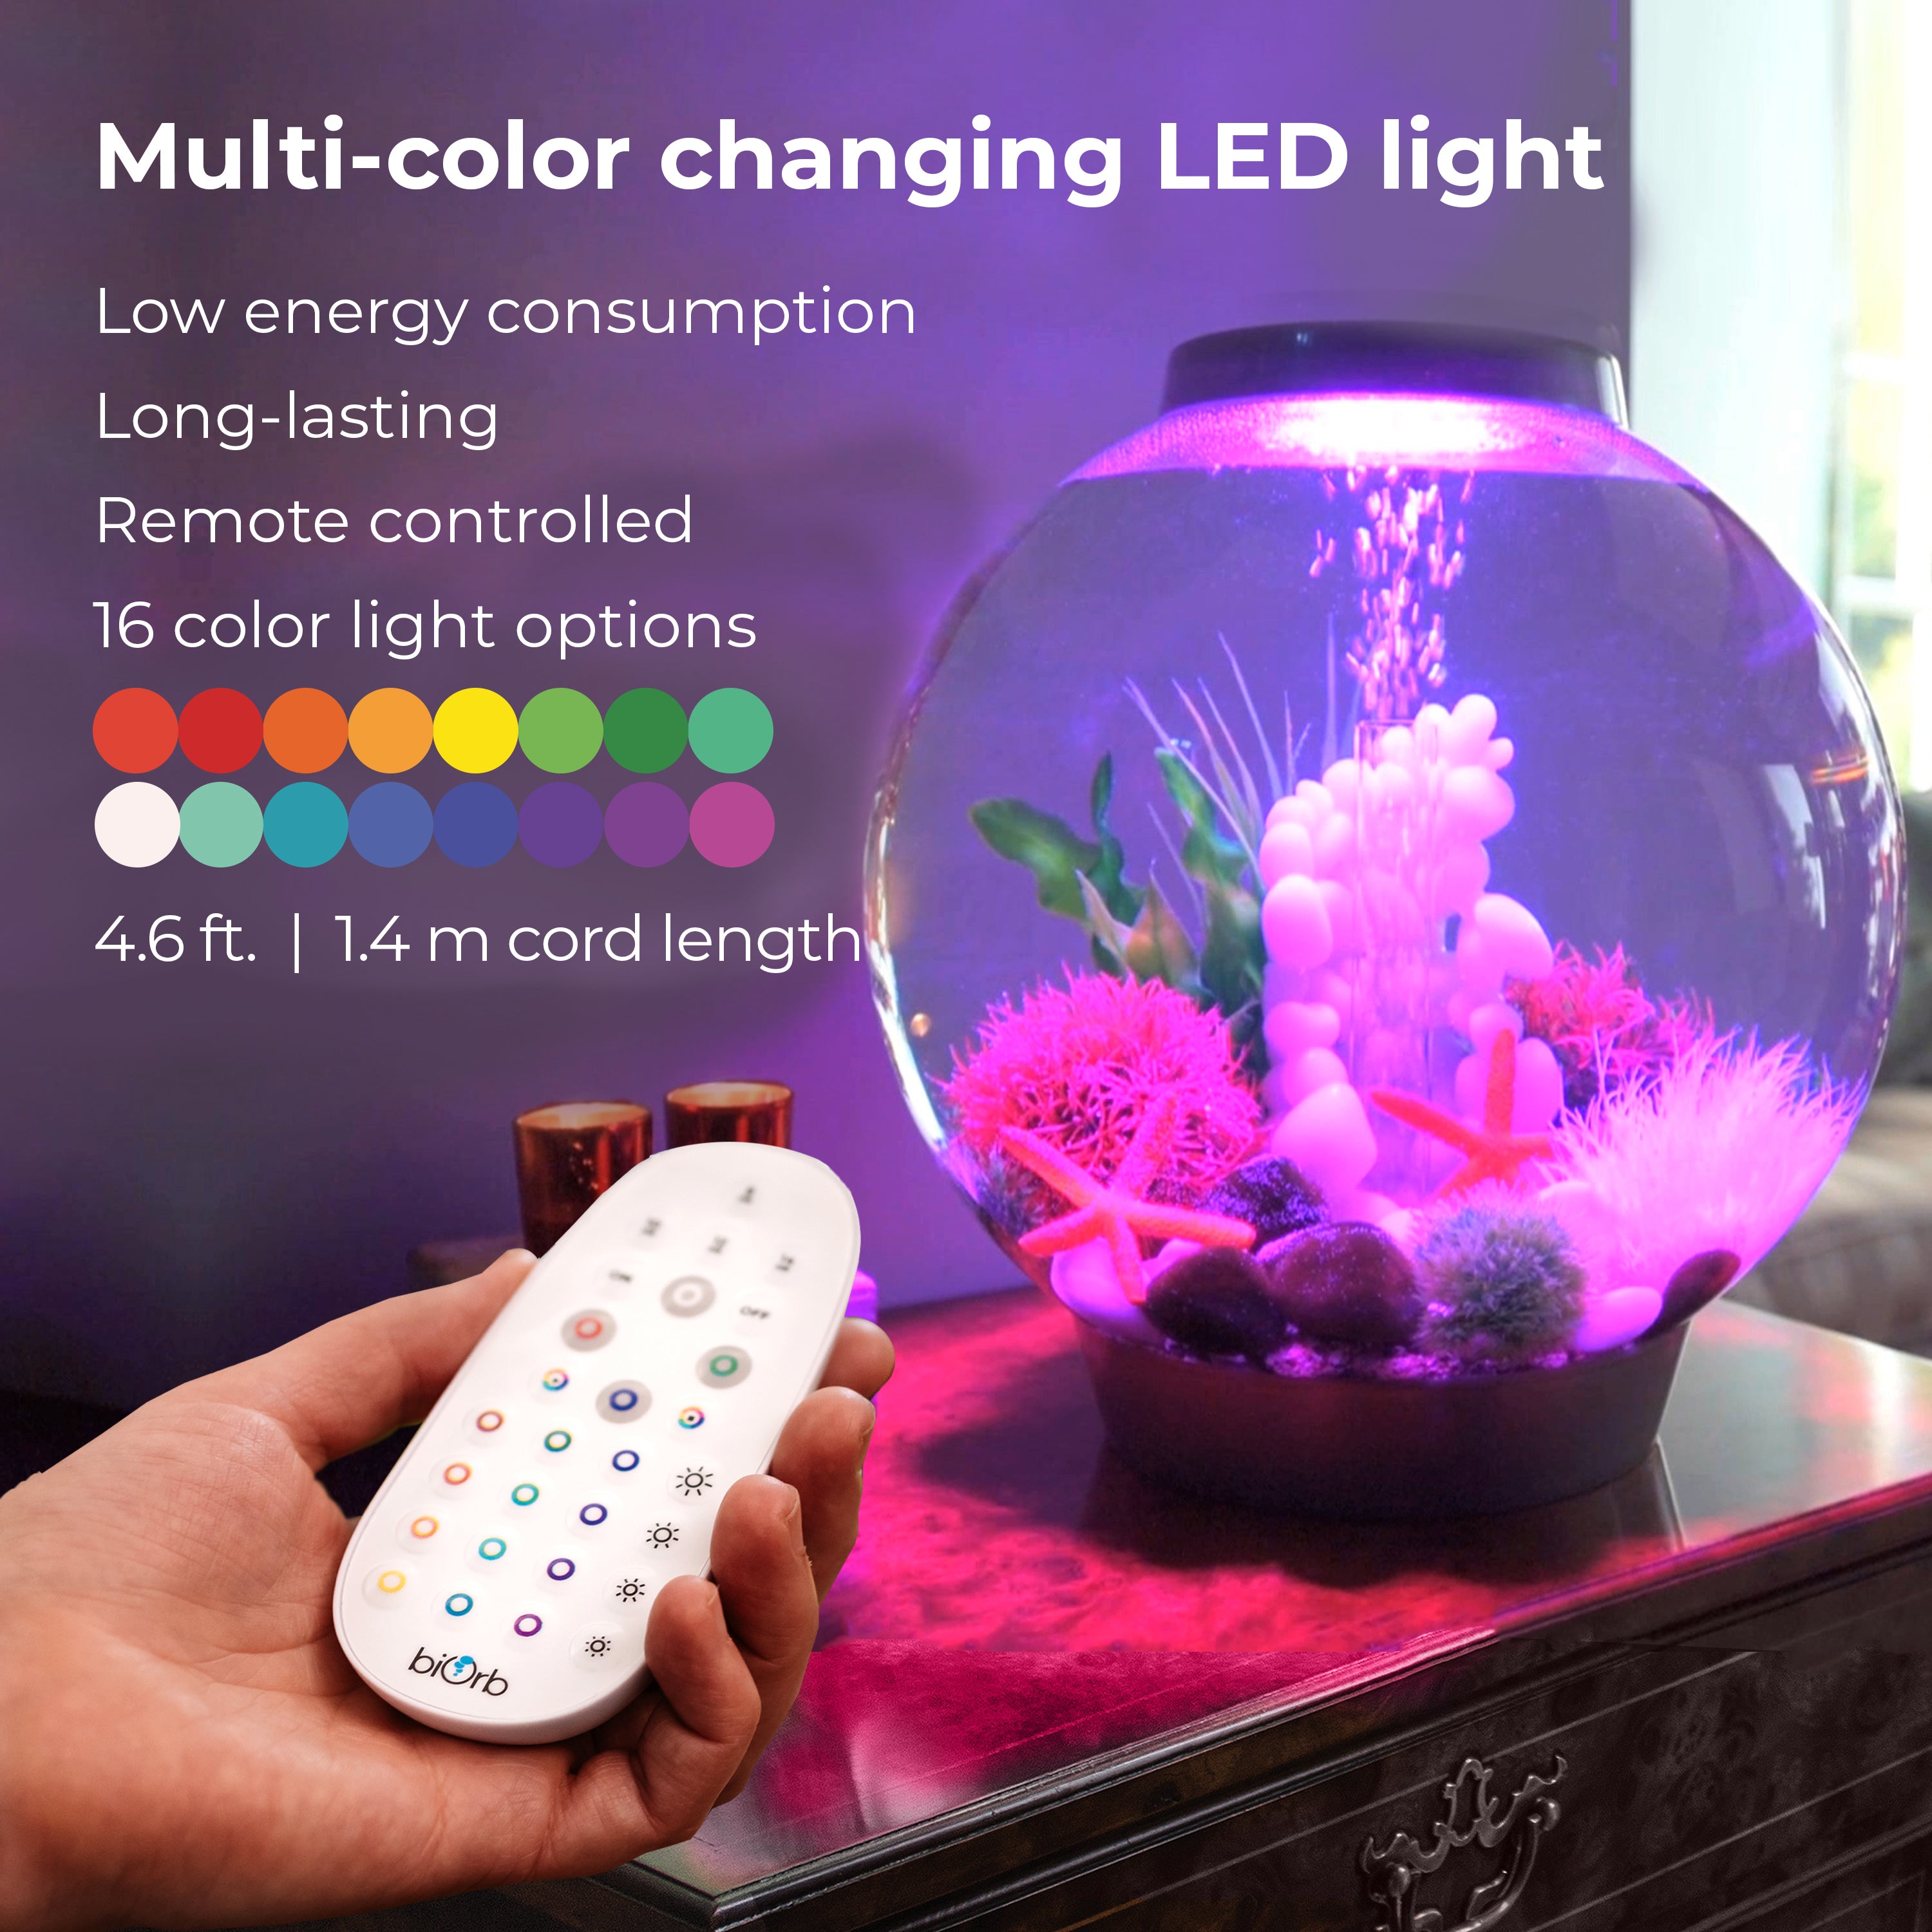 CLASSIC 60 Aquarium with MCR Light - 16 gallon features Multi-color changing LED light